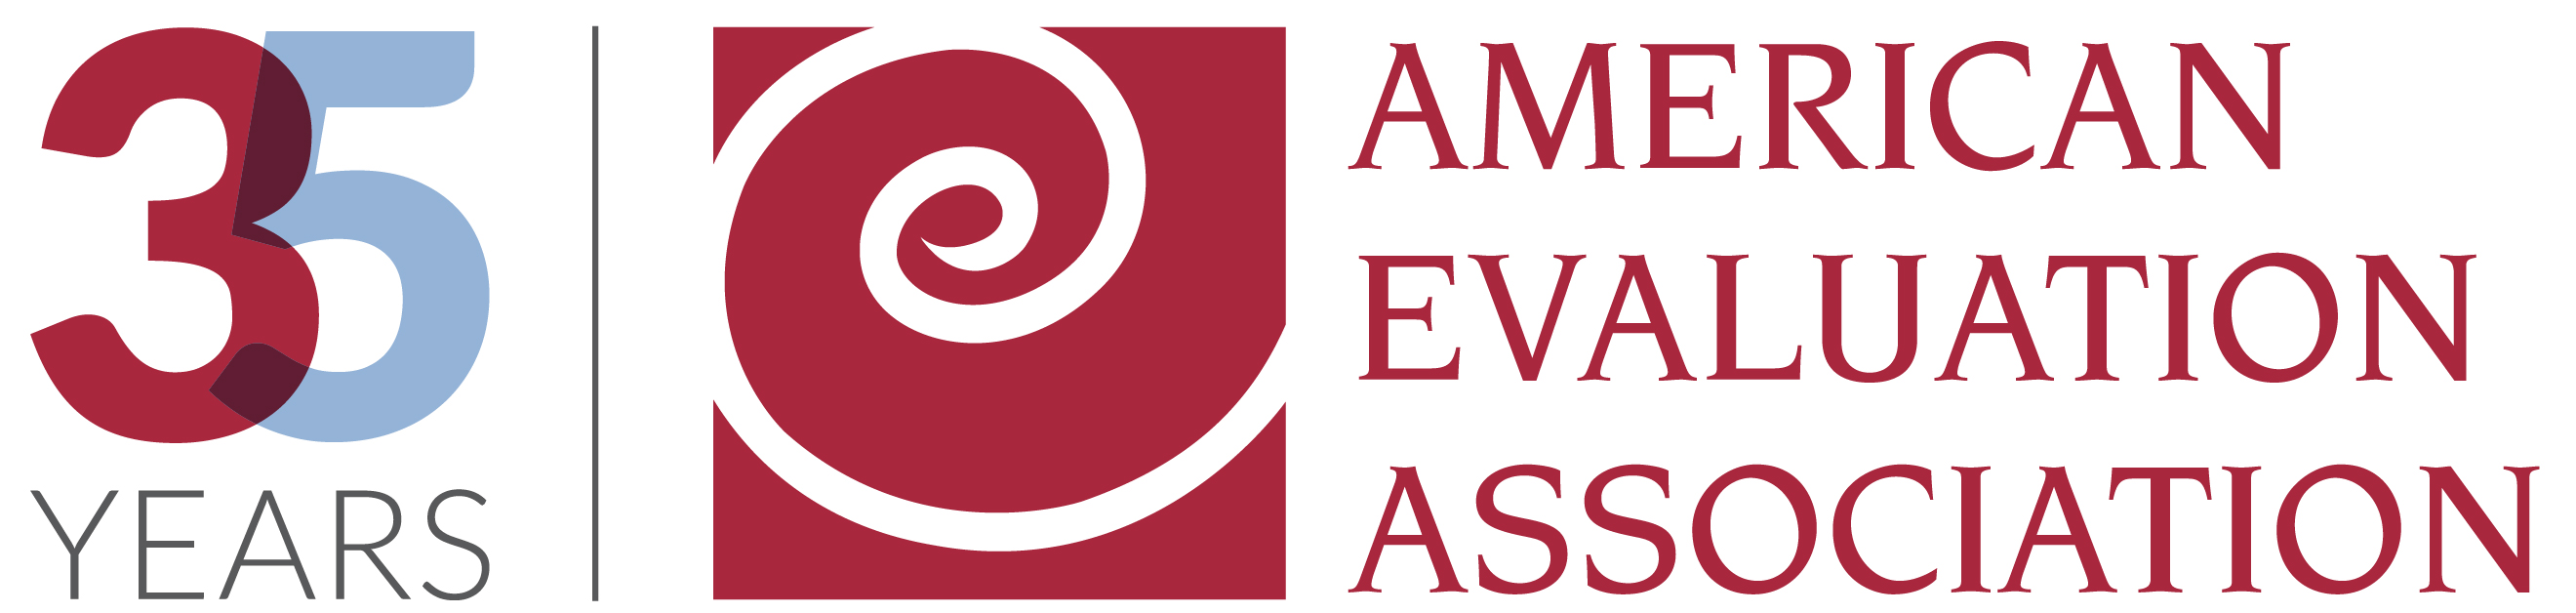 Aea jobs american evaluation association